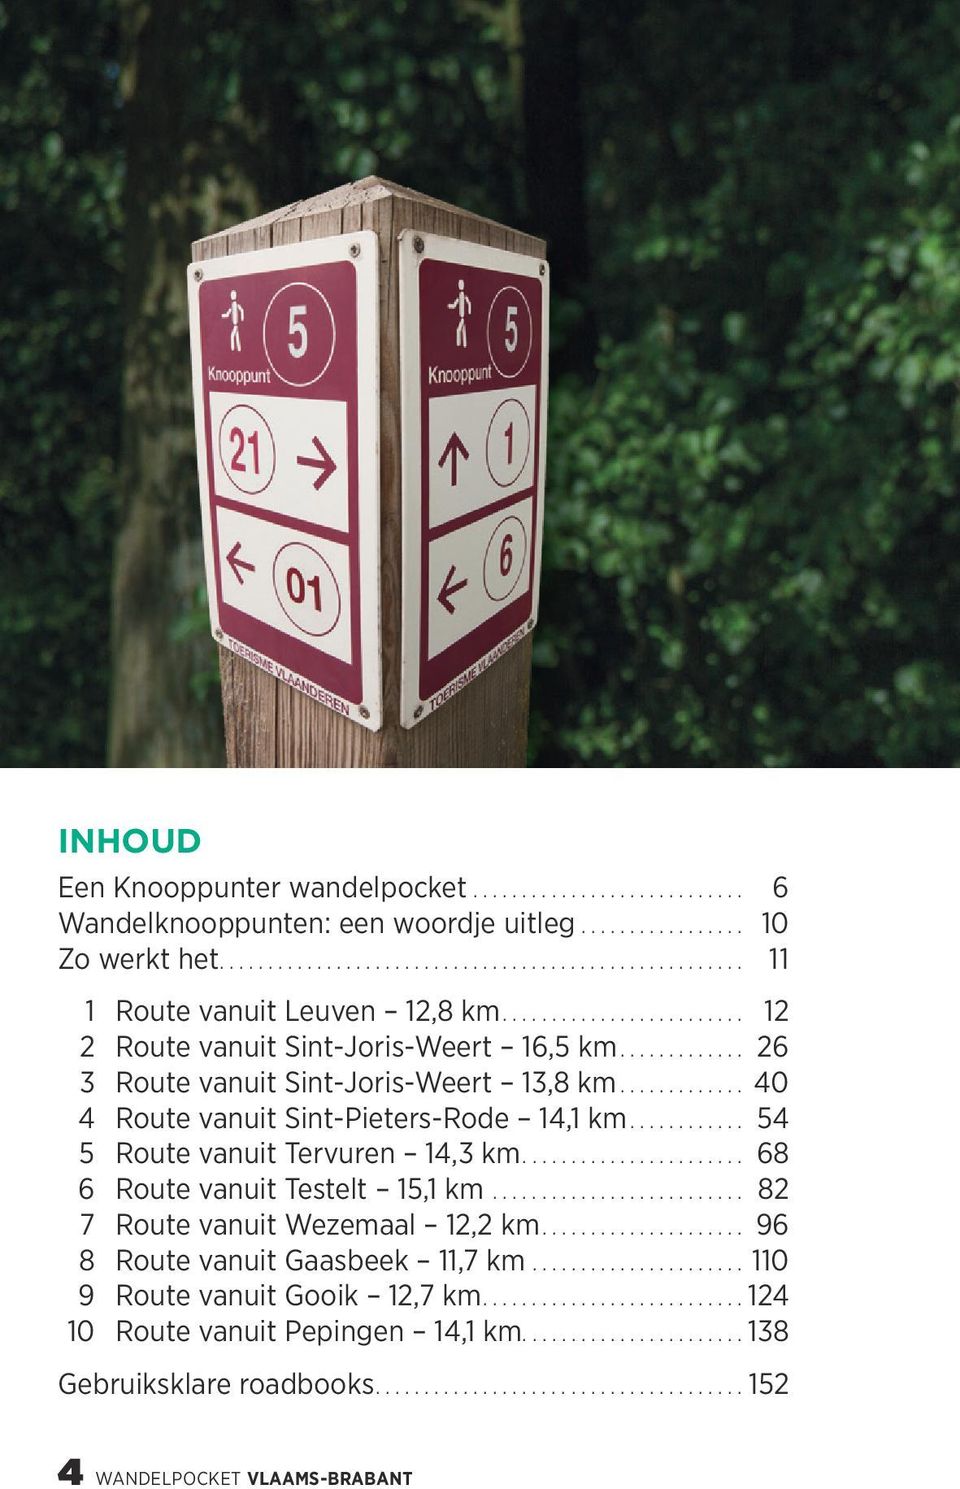 ... 54 5 Route vanuit Tervuren 14,3 km.... 68 6 Route vanuit Testelt 15,1 km... 82 7 Route vanuit Wezemaal 12,2 km.